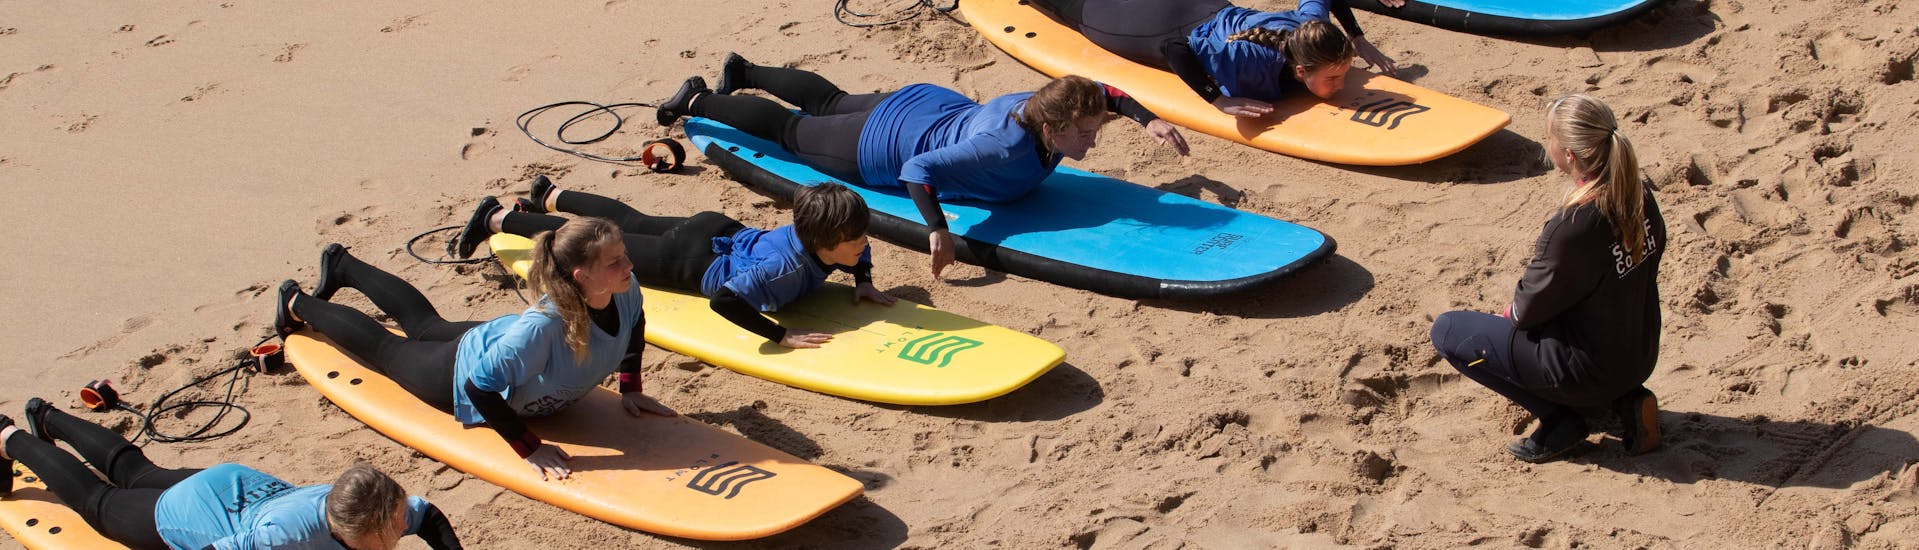 Un grupo de personas aprende a remar durante una clase de surf en Ericeira en la Praia do Matadouro con Boardculture Surf Center.